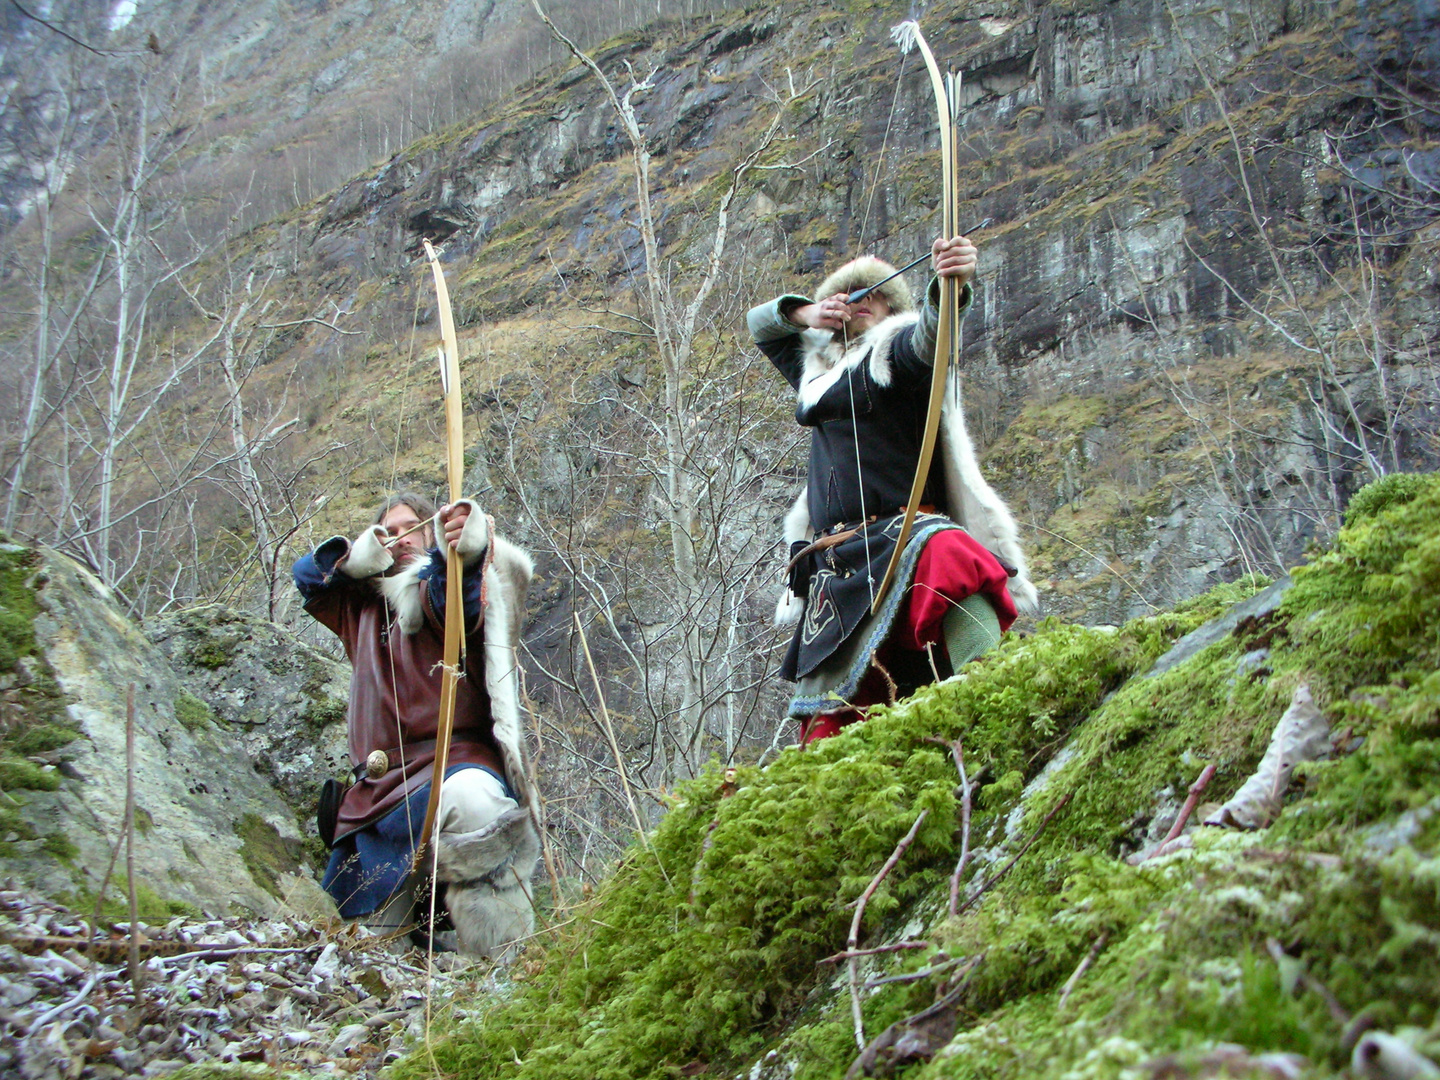 Njardar kingdom film - archerors